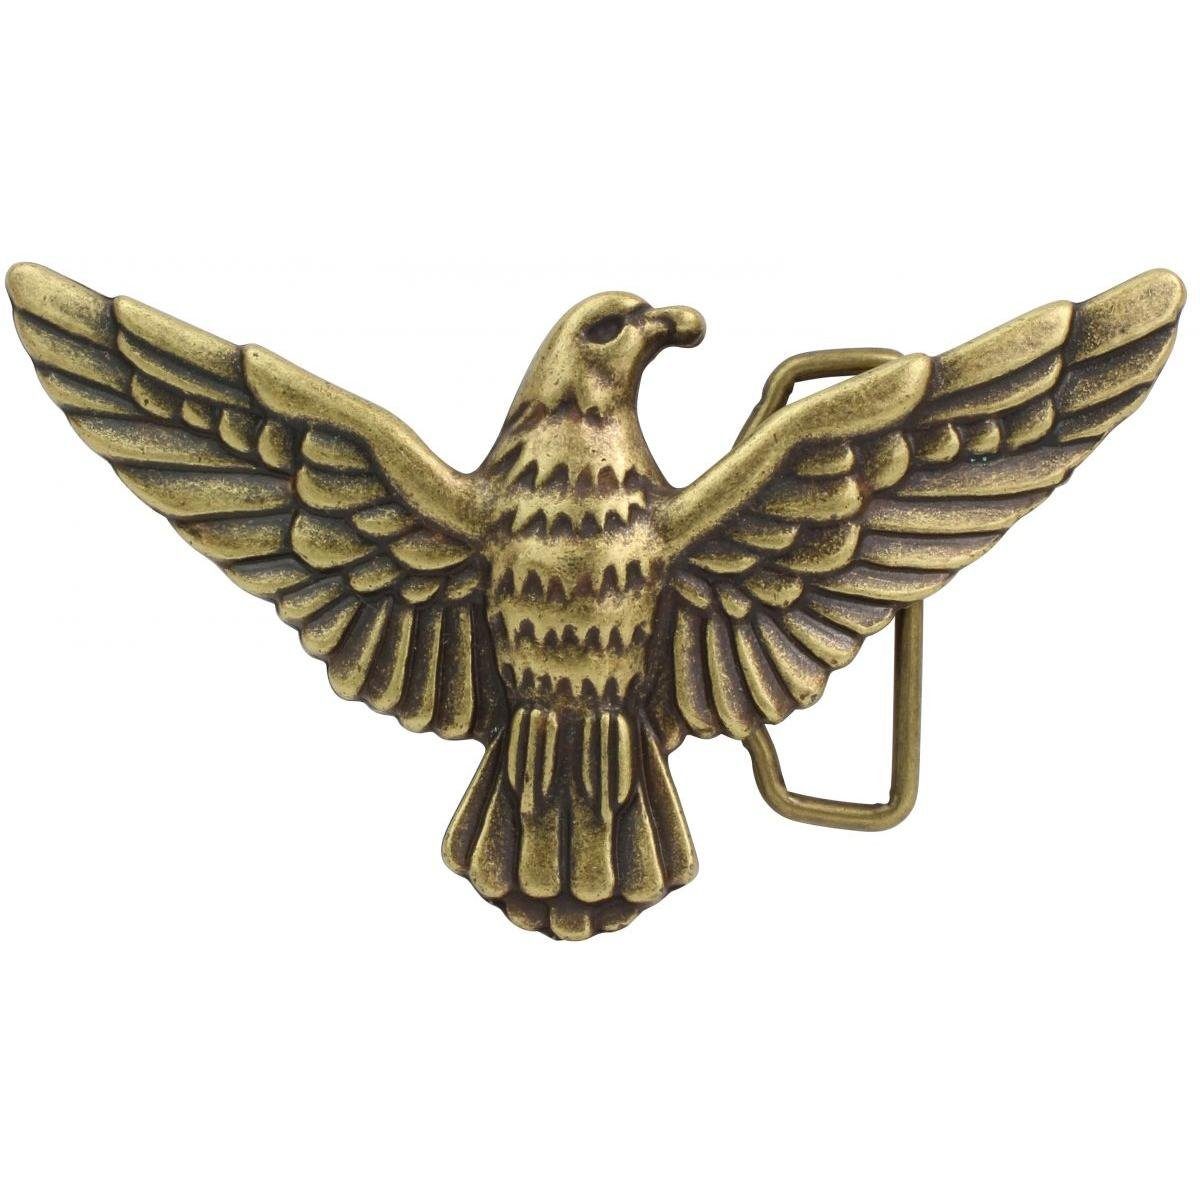 Absolut beliebt BELTINGER Gürtelschnalle Eagle 4,0 - Wechselschließe 40mm Altmessing - cm Buckle Gürtel bis Gürtelschließe